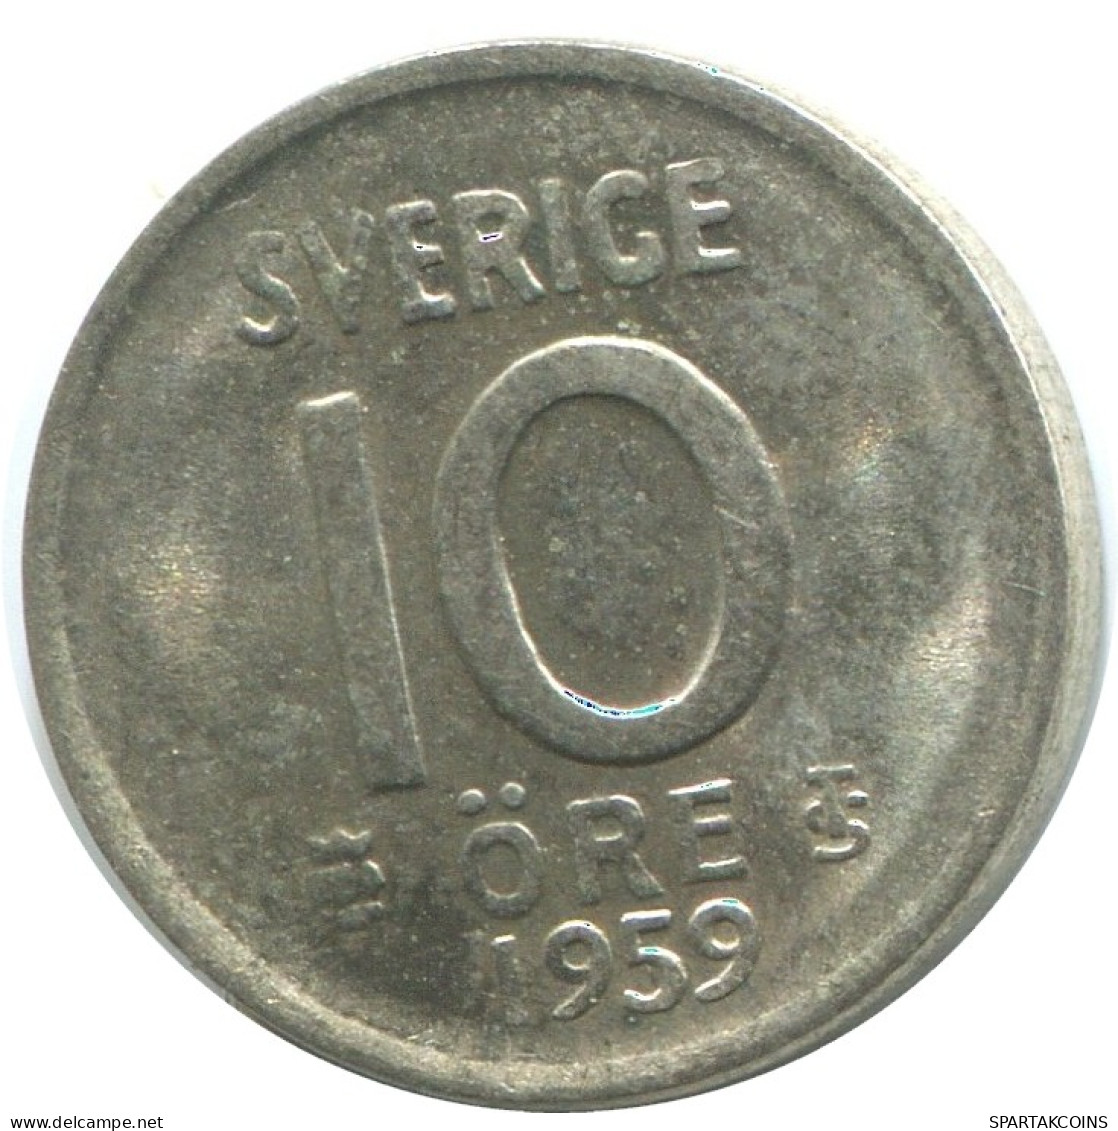 10 ORE 1959 SCHWEDEN SWEDEN SILBER Münze #AD031.2.D.A - Sweden